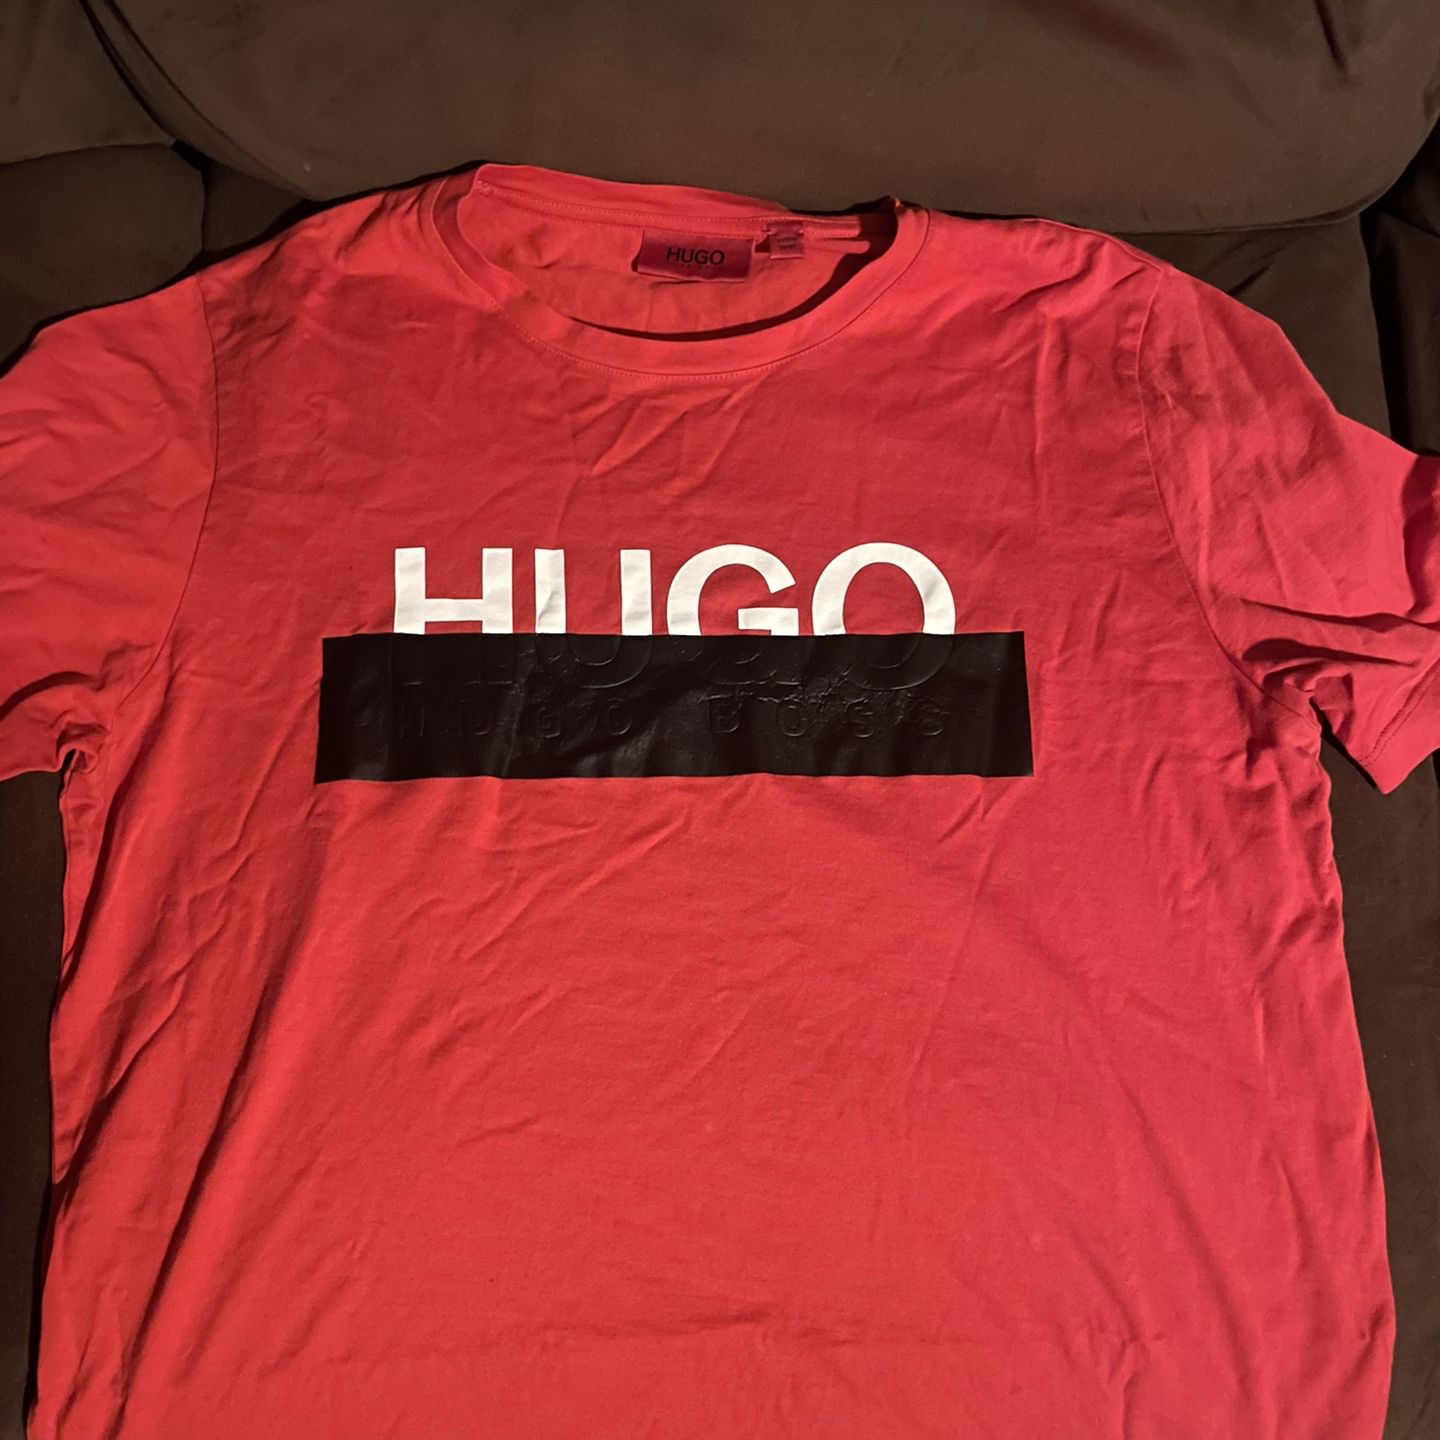 Hugo Boss T-shirt Size S (red)